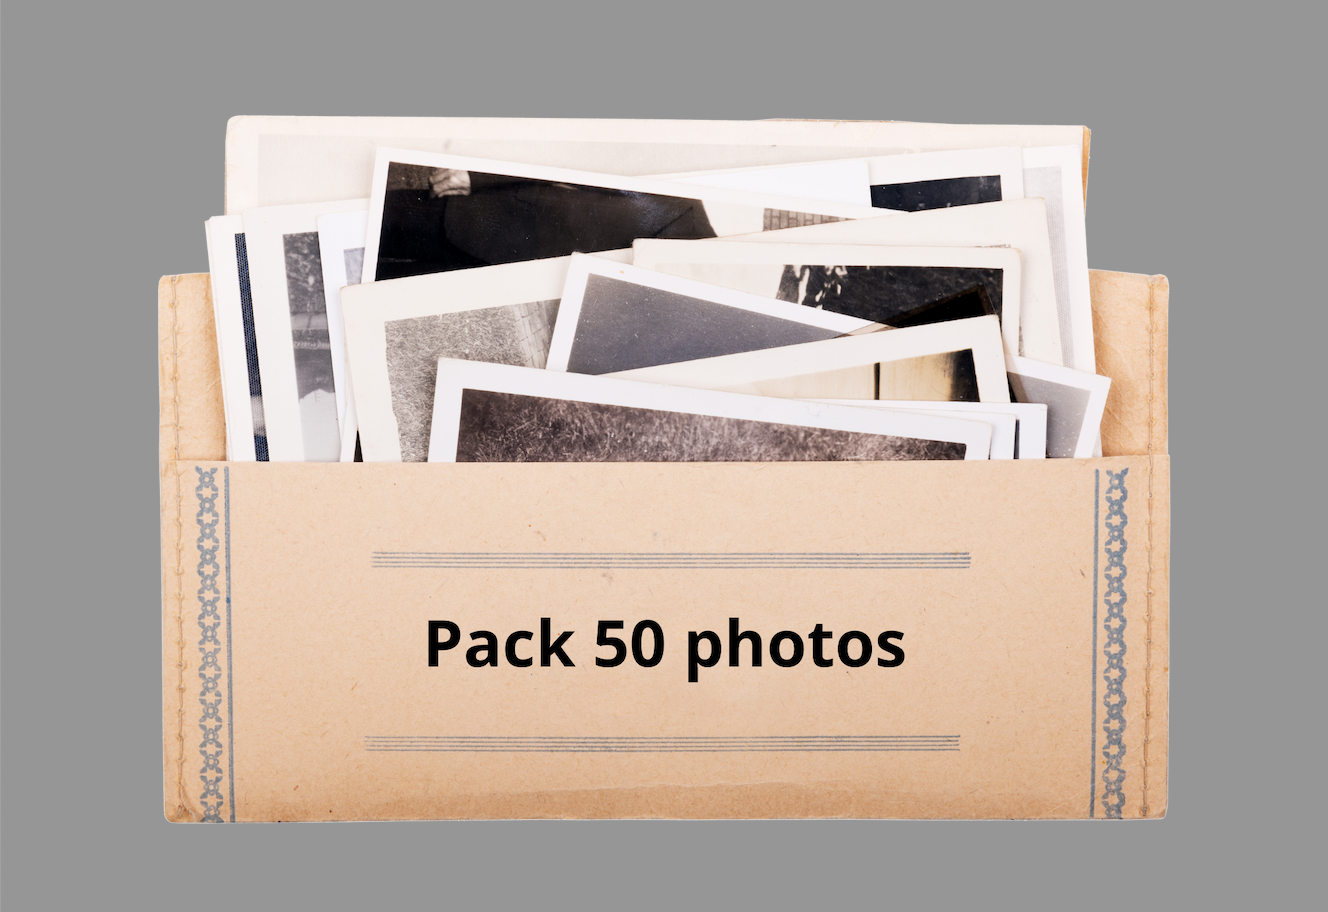 Pack 50 photos